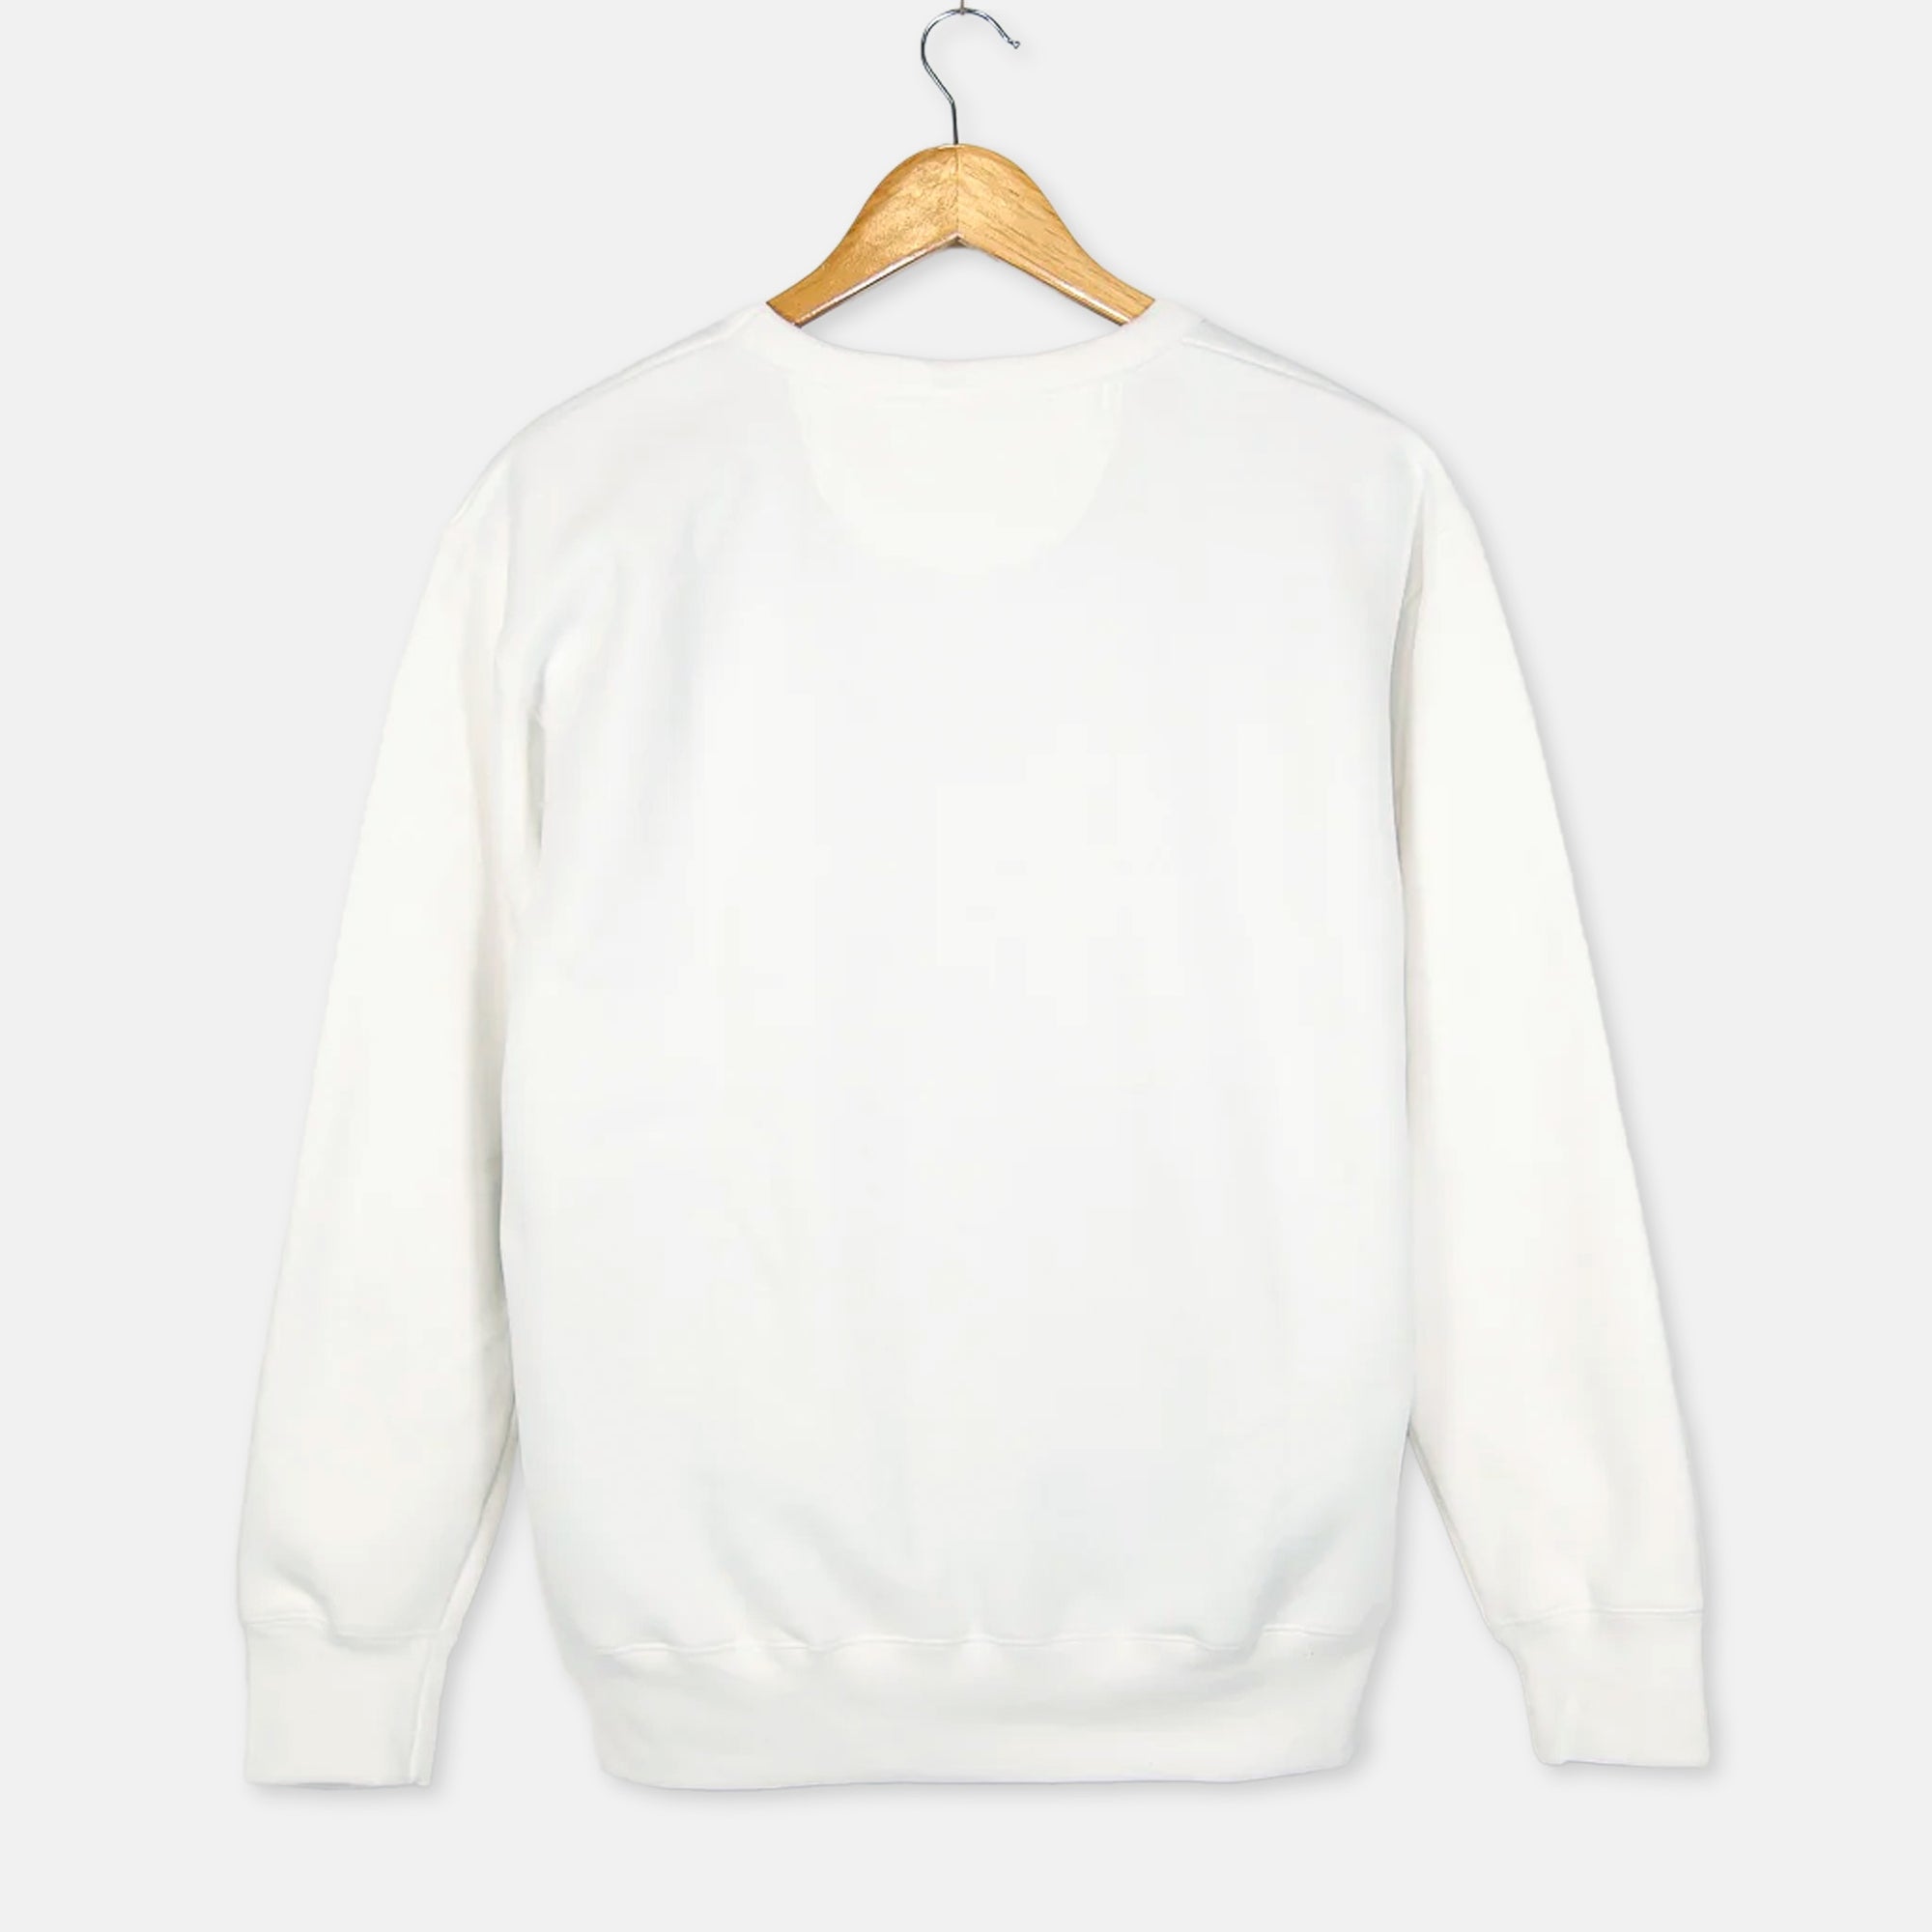 Serious Adult - Baker Boy Pullover Sweatshirt - White